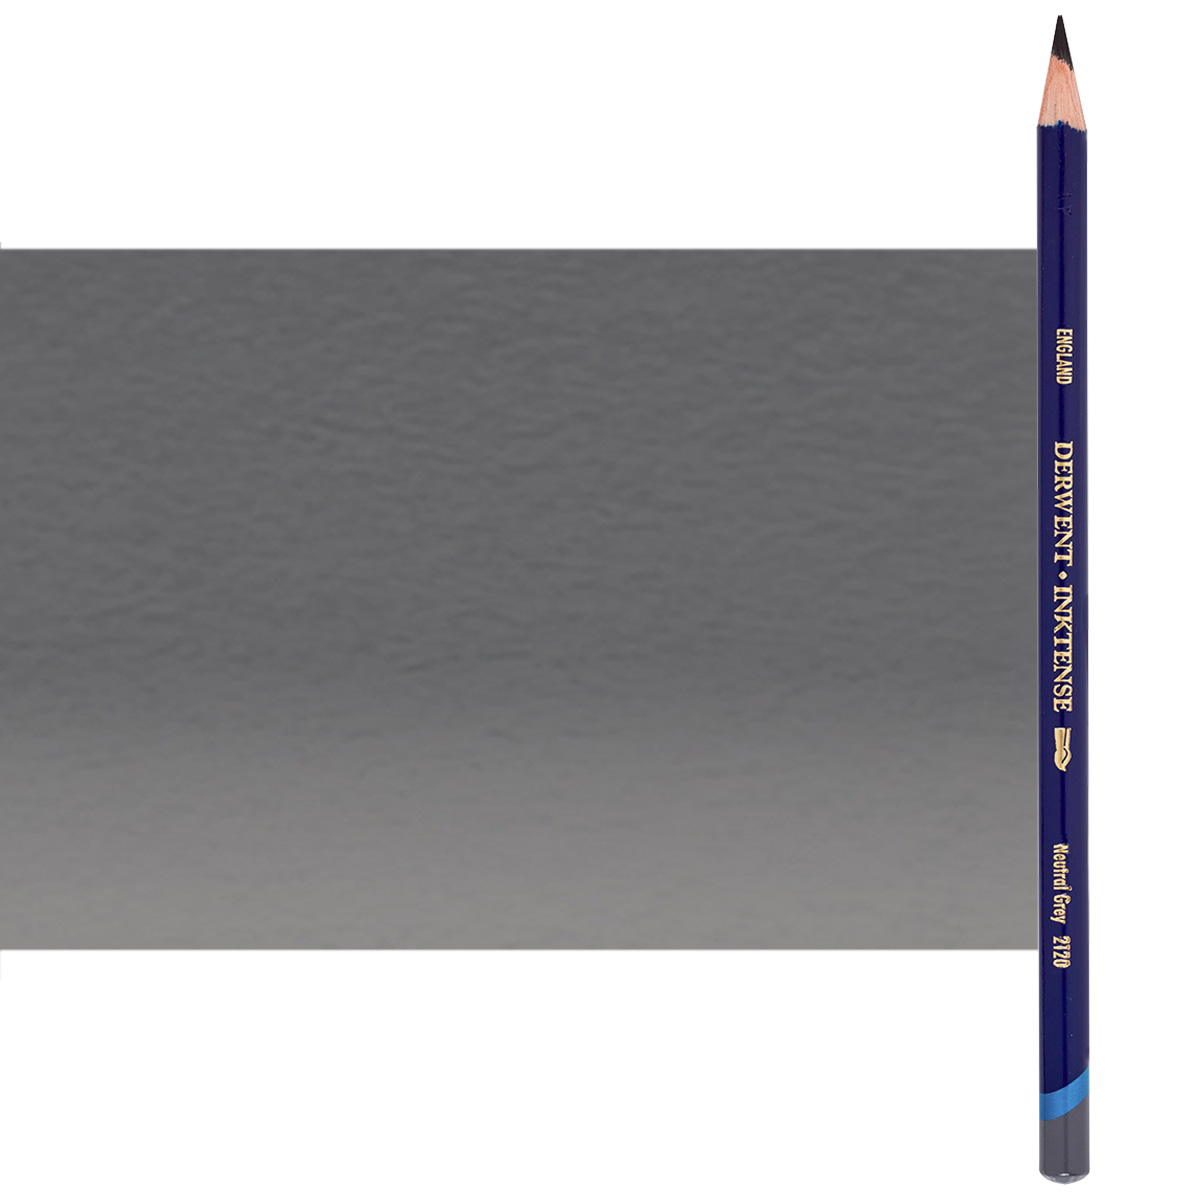 Winsor & Newton Studio Collection Graphite Pencil Set of 12